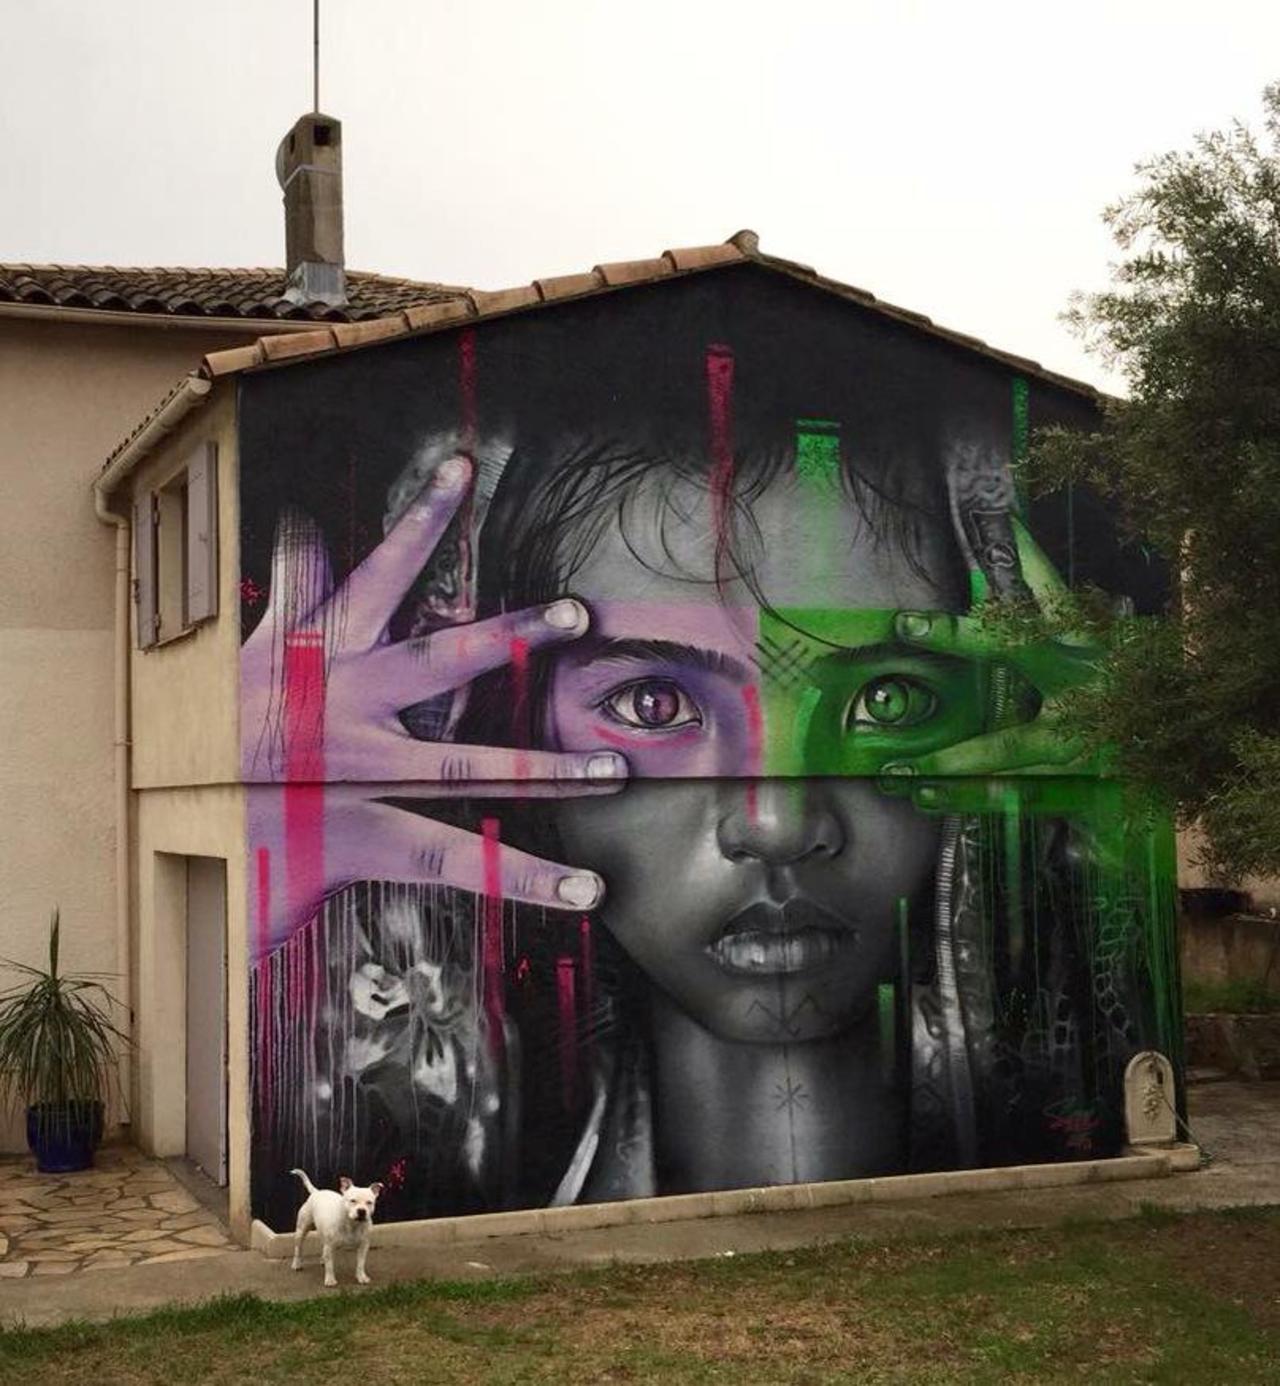 'Open your mind'
Street Art by Guillaume Dusotoit 

#art #arte #graffiti #streetart http://t.co/OZX0x7CYLG